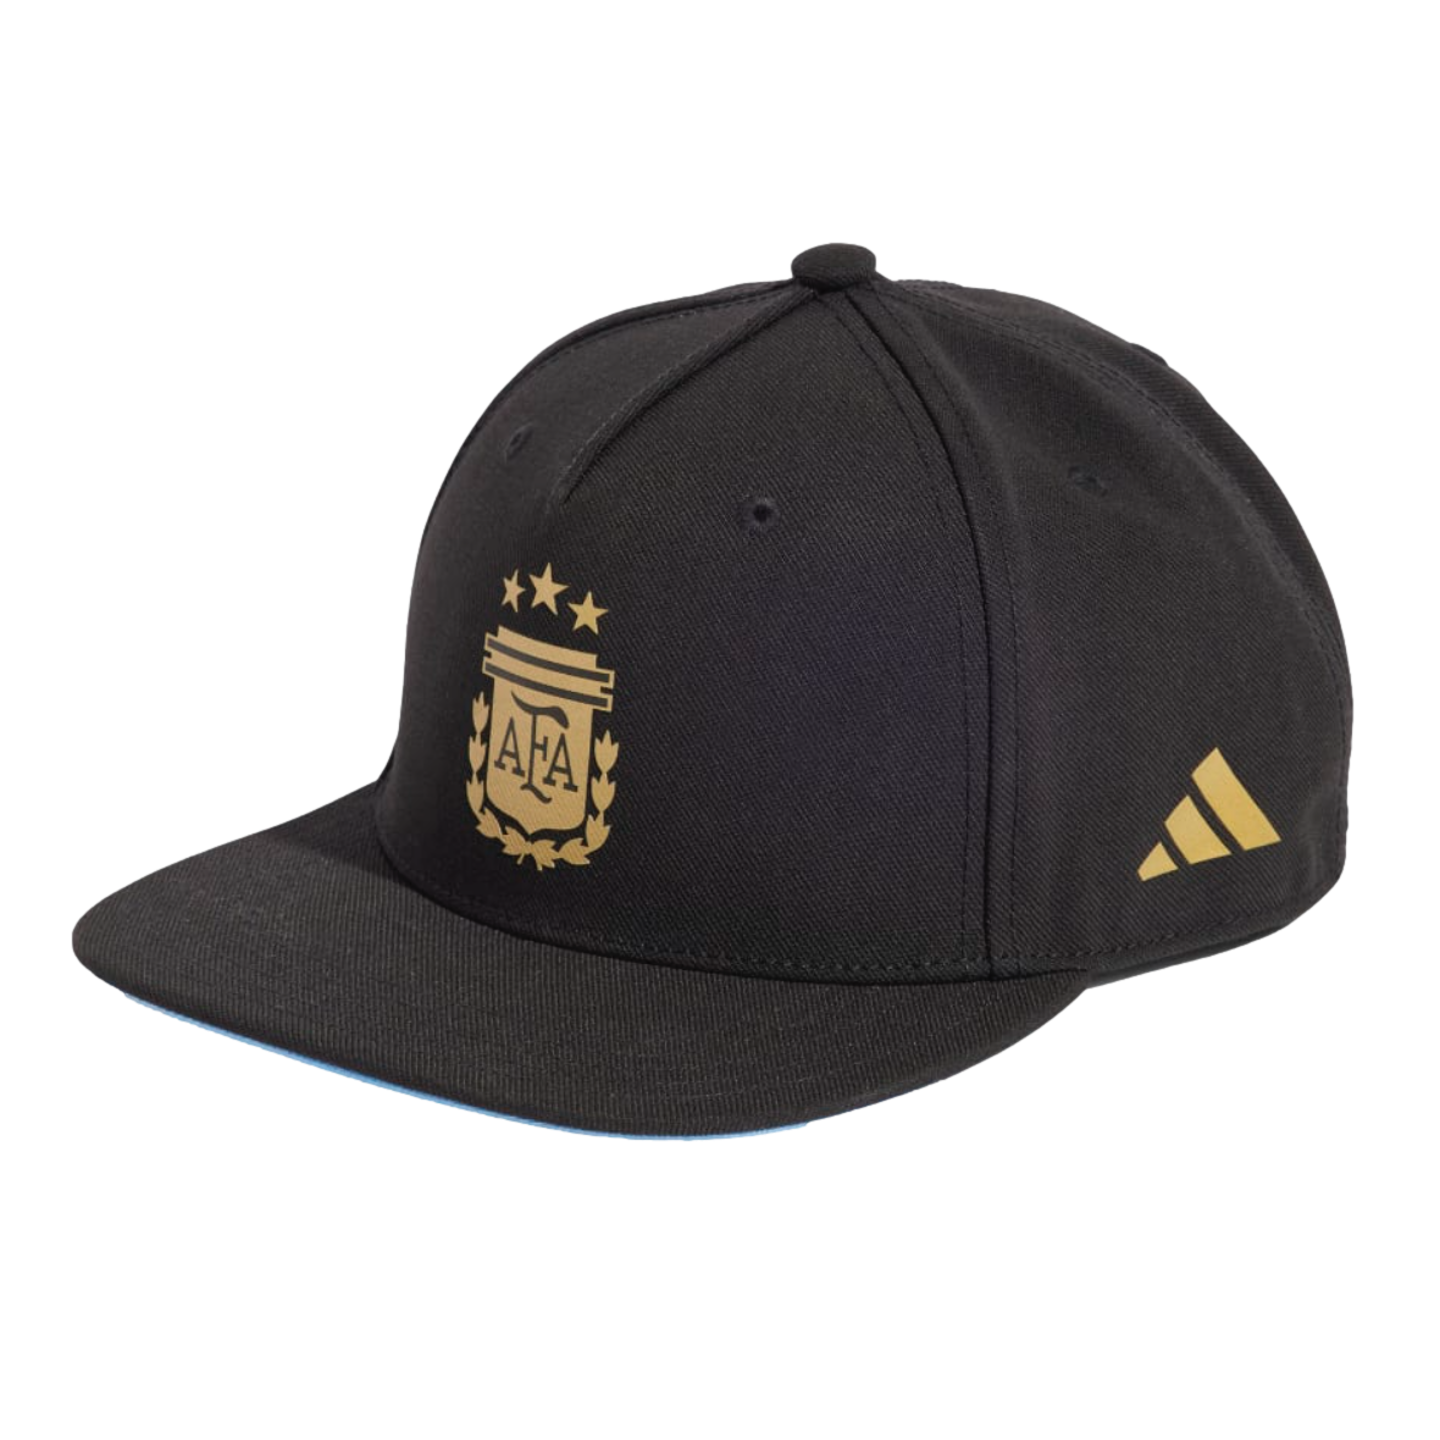 Adidas Argentina Snapback Cap